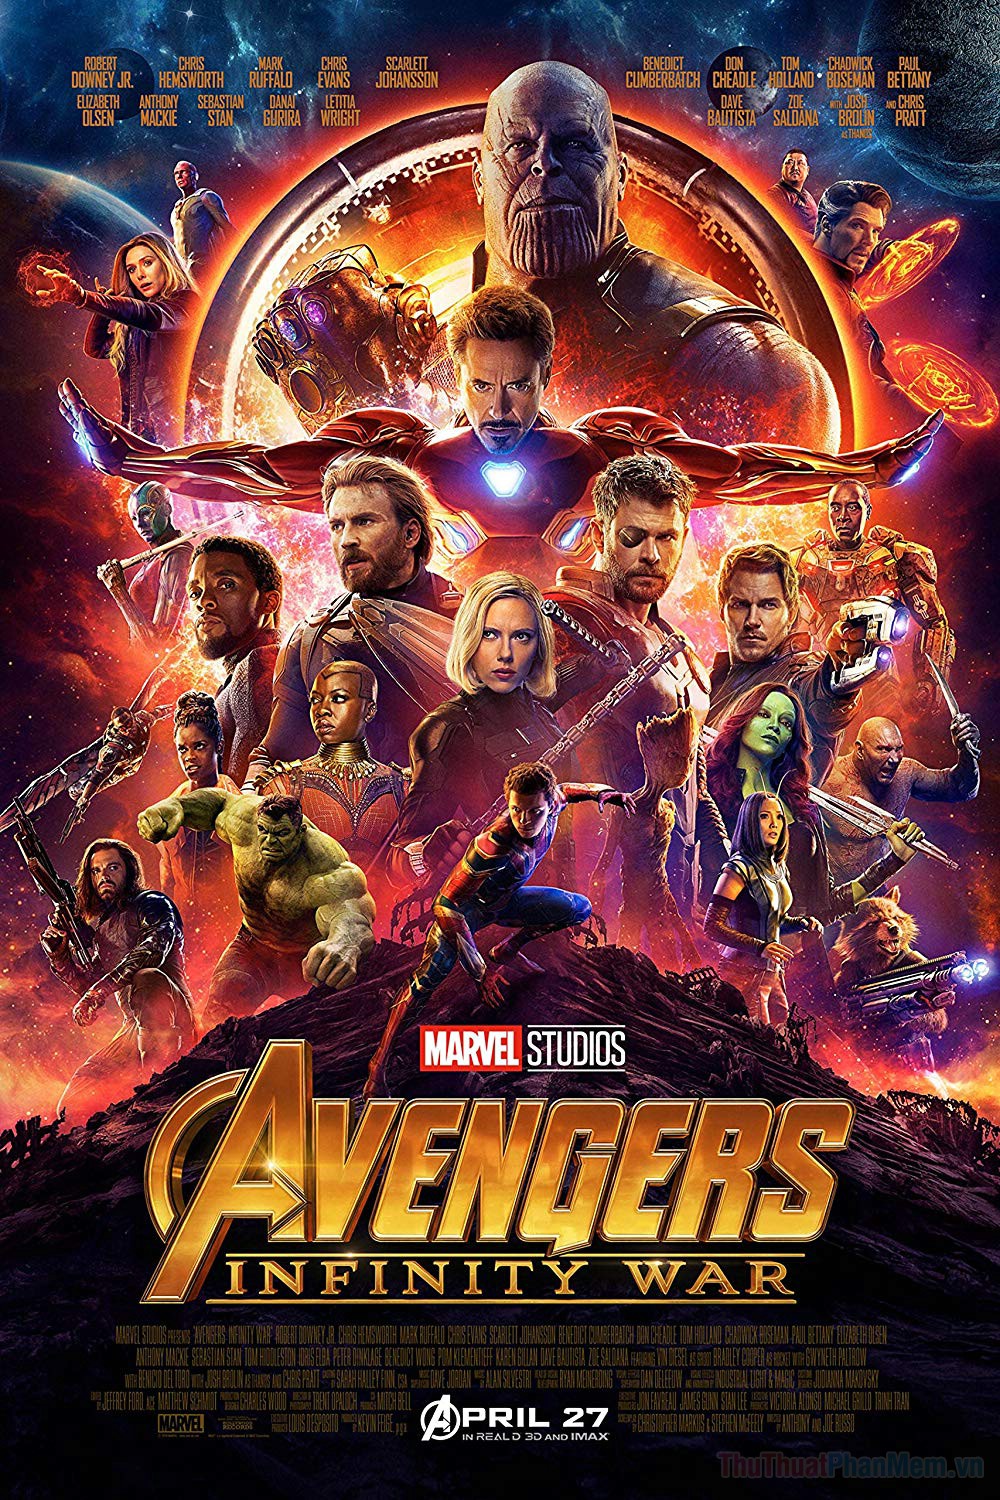 Avengers Infinity War - Avengers Cuộc Chiến Vô Cực (2018)